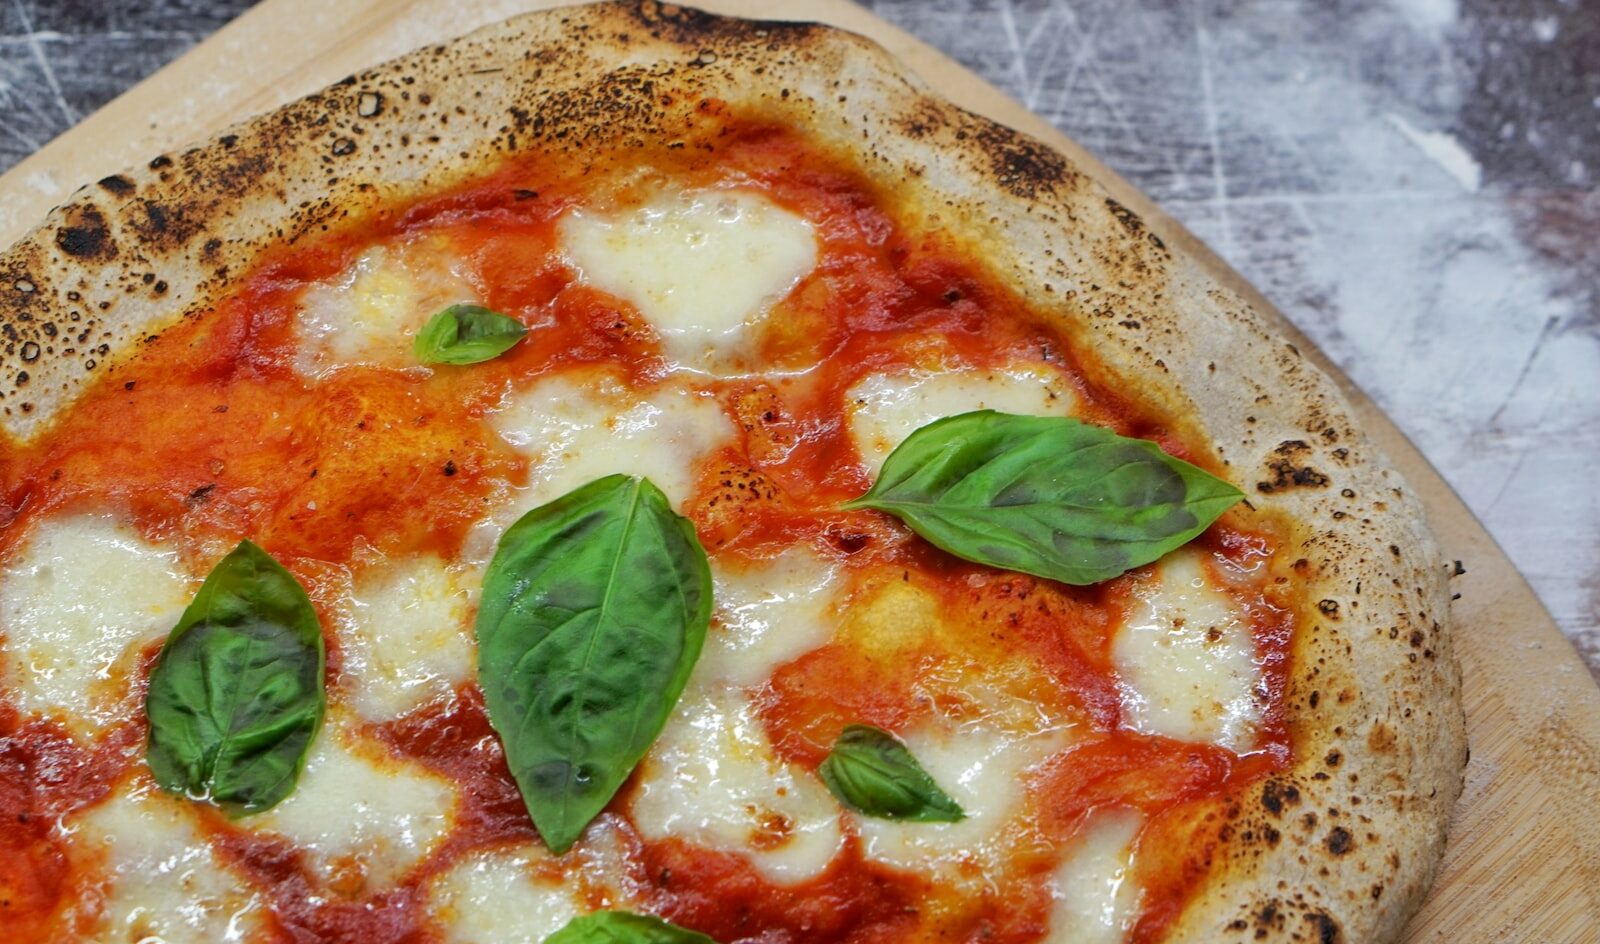 Neapolitan margherita pizza